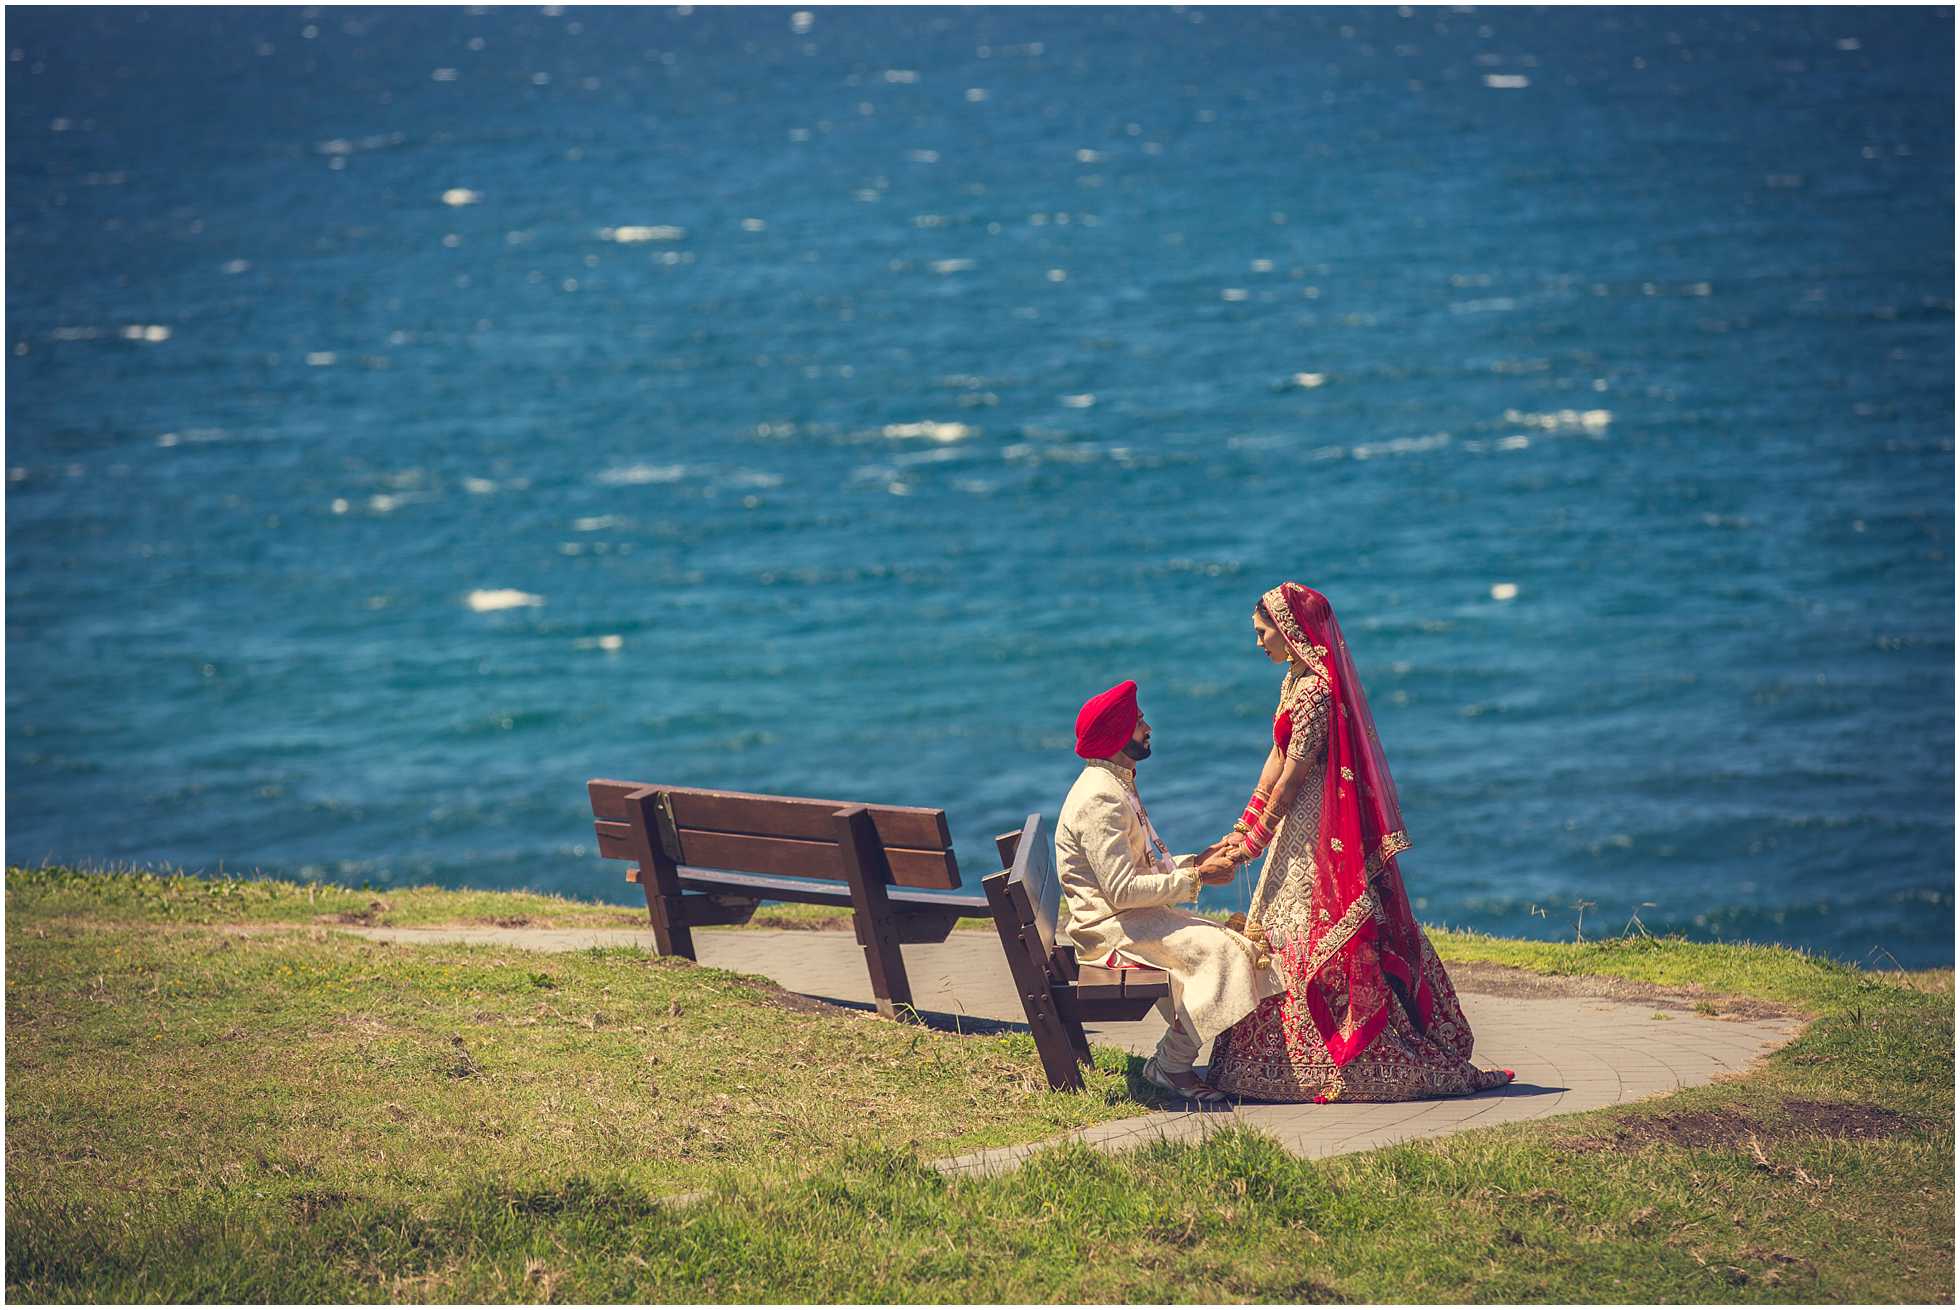 Punjabi Wedding Photoshoot in Coffs Harbour Australia